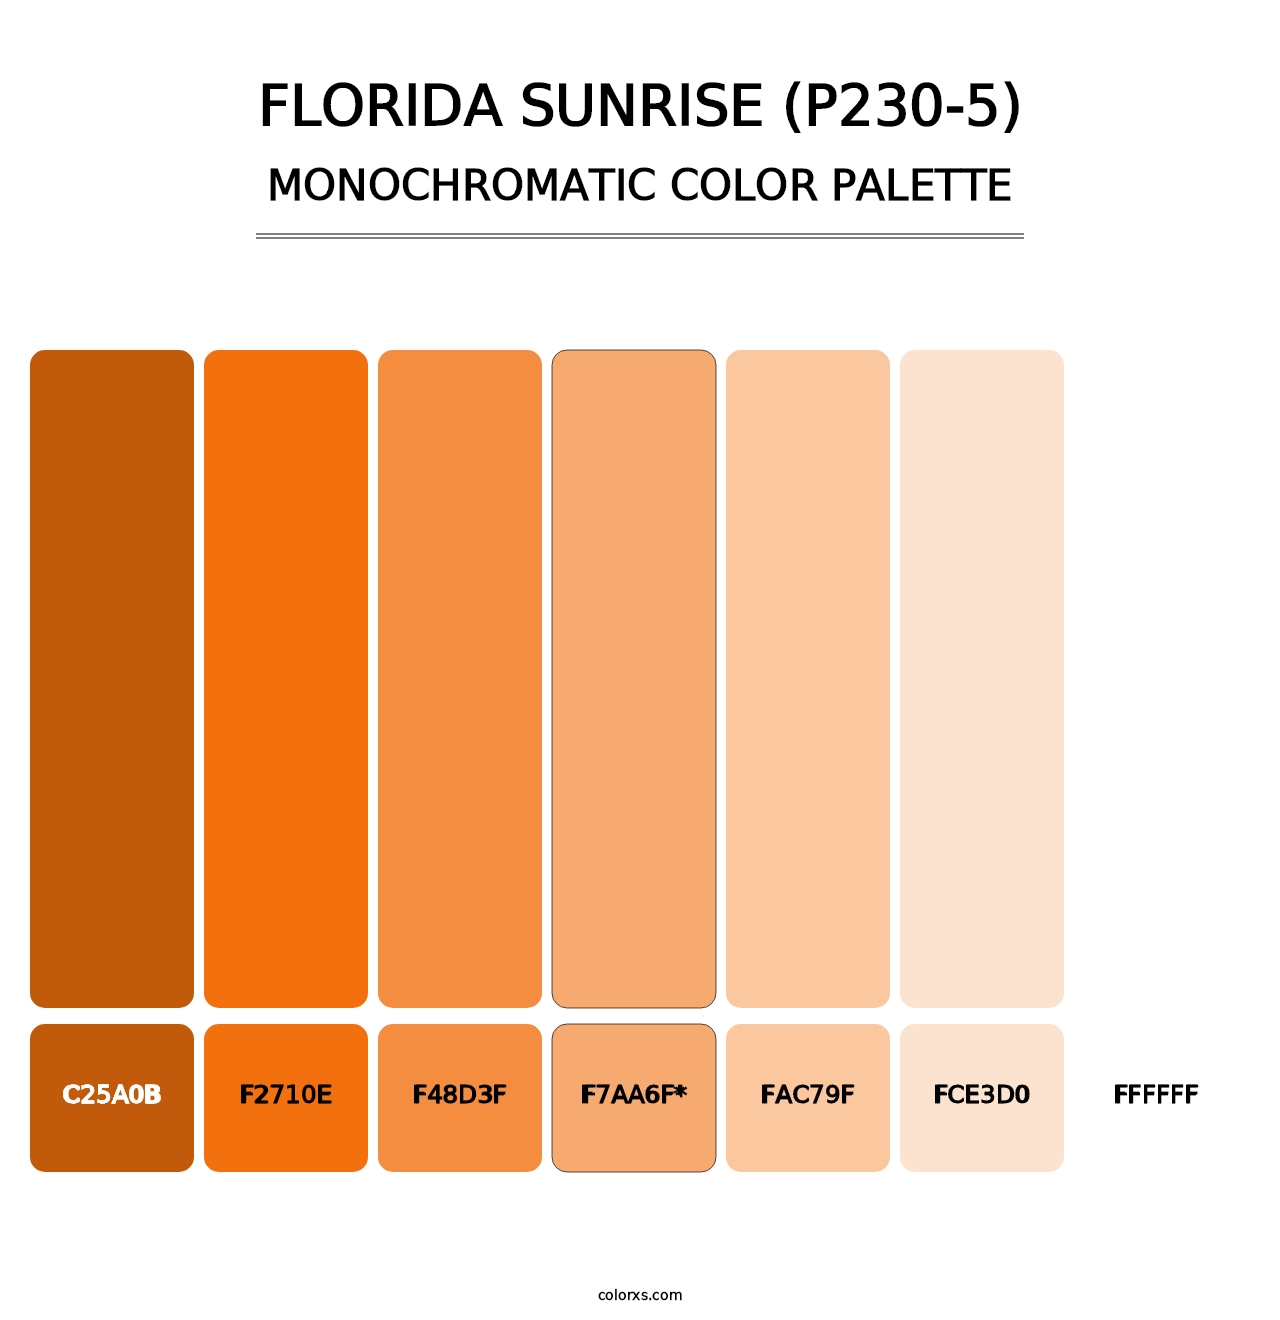 Florida Sunrise (P230-5) - Monochromatic Color Palette